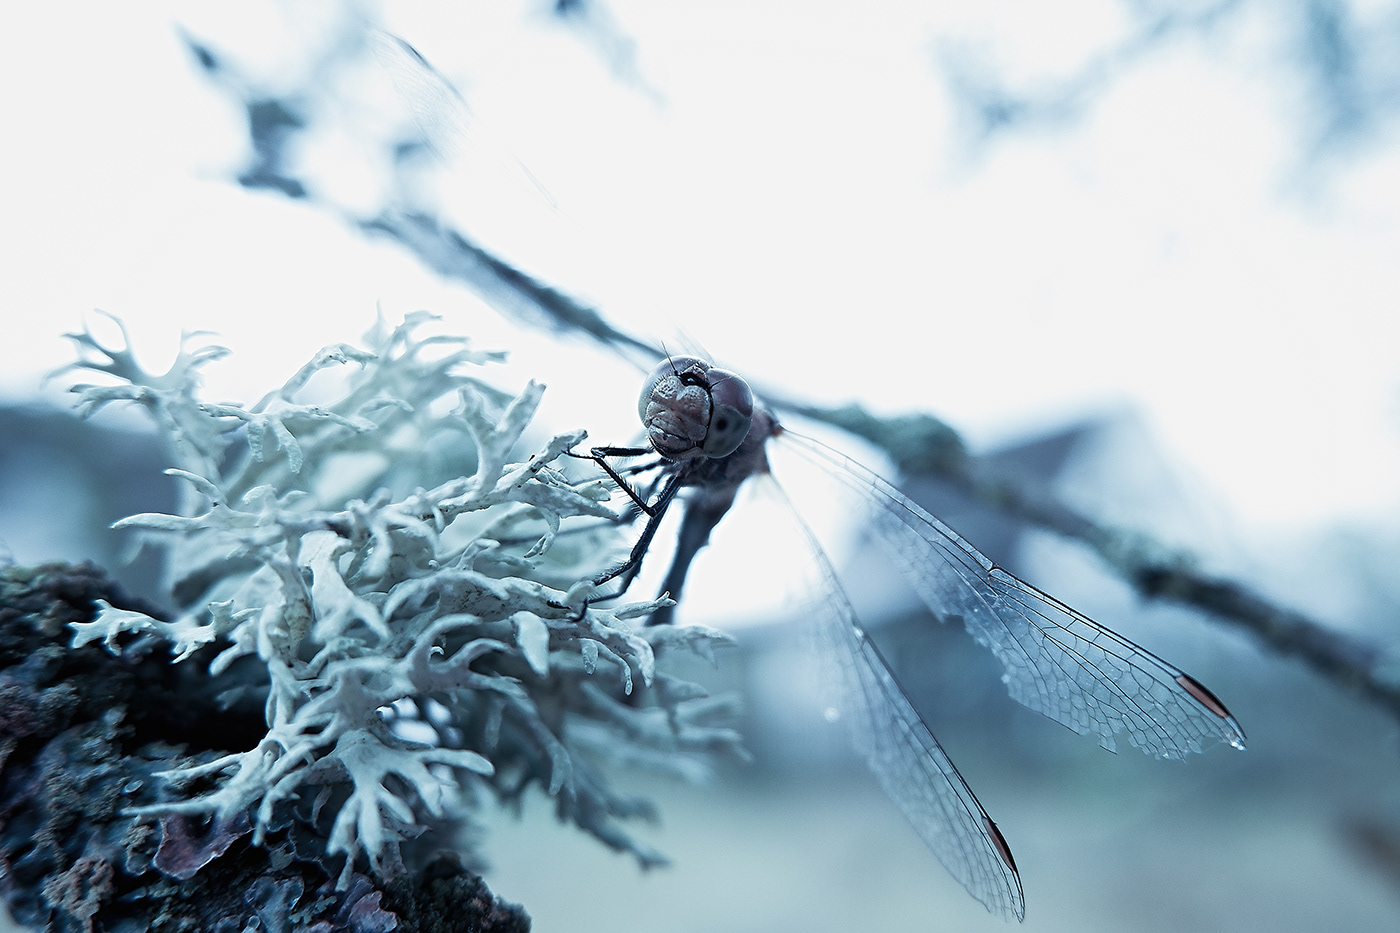 baterfly belarus invertebrate Landscape macro model Nature photographer Photography  portrait